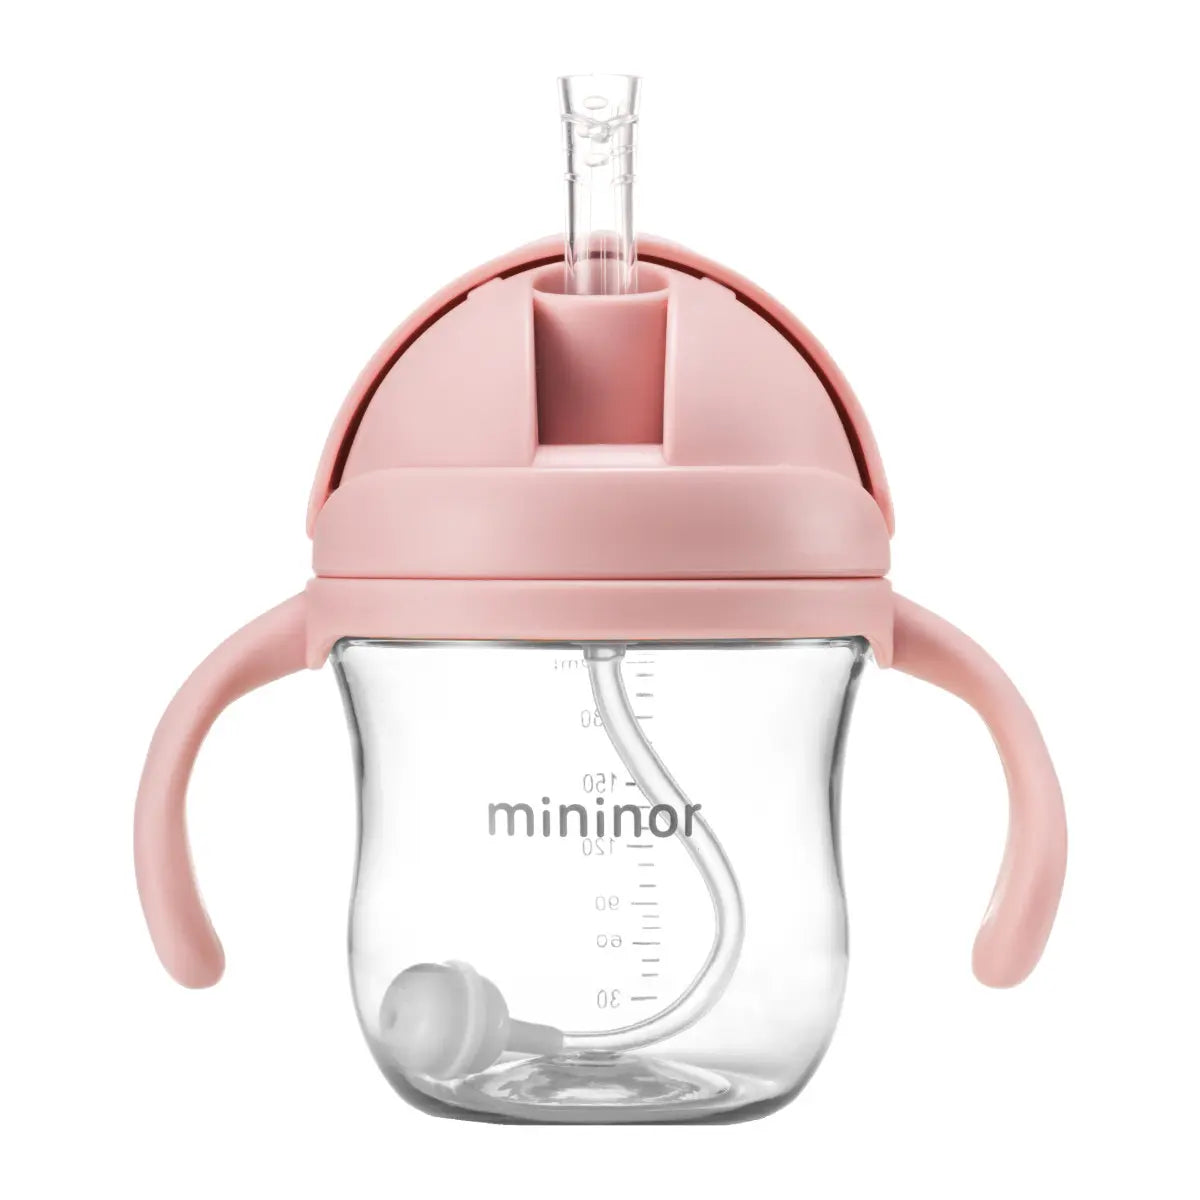 Mininor Straw Bottle Tritan 220ml – Rose - Tiny Tots Baby Store 